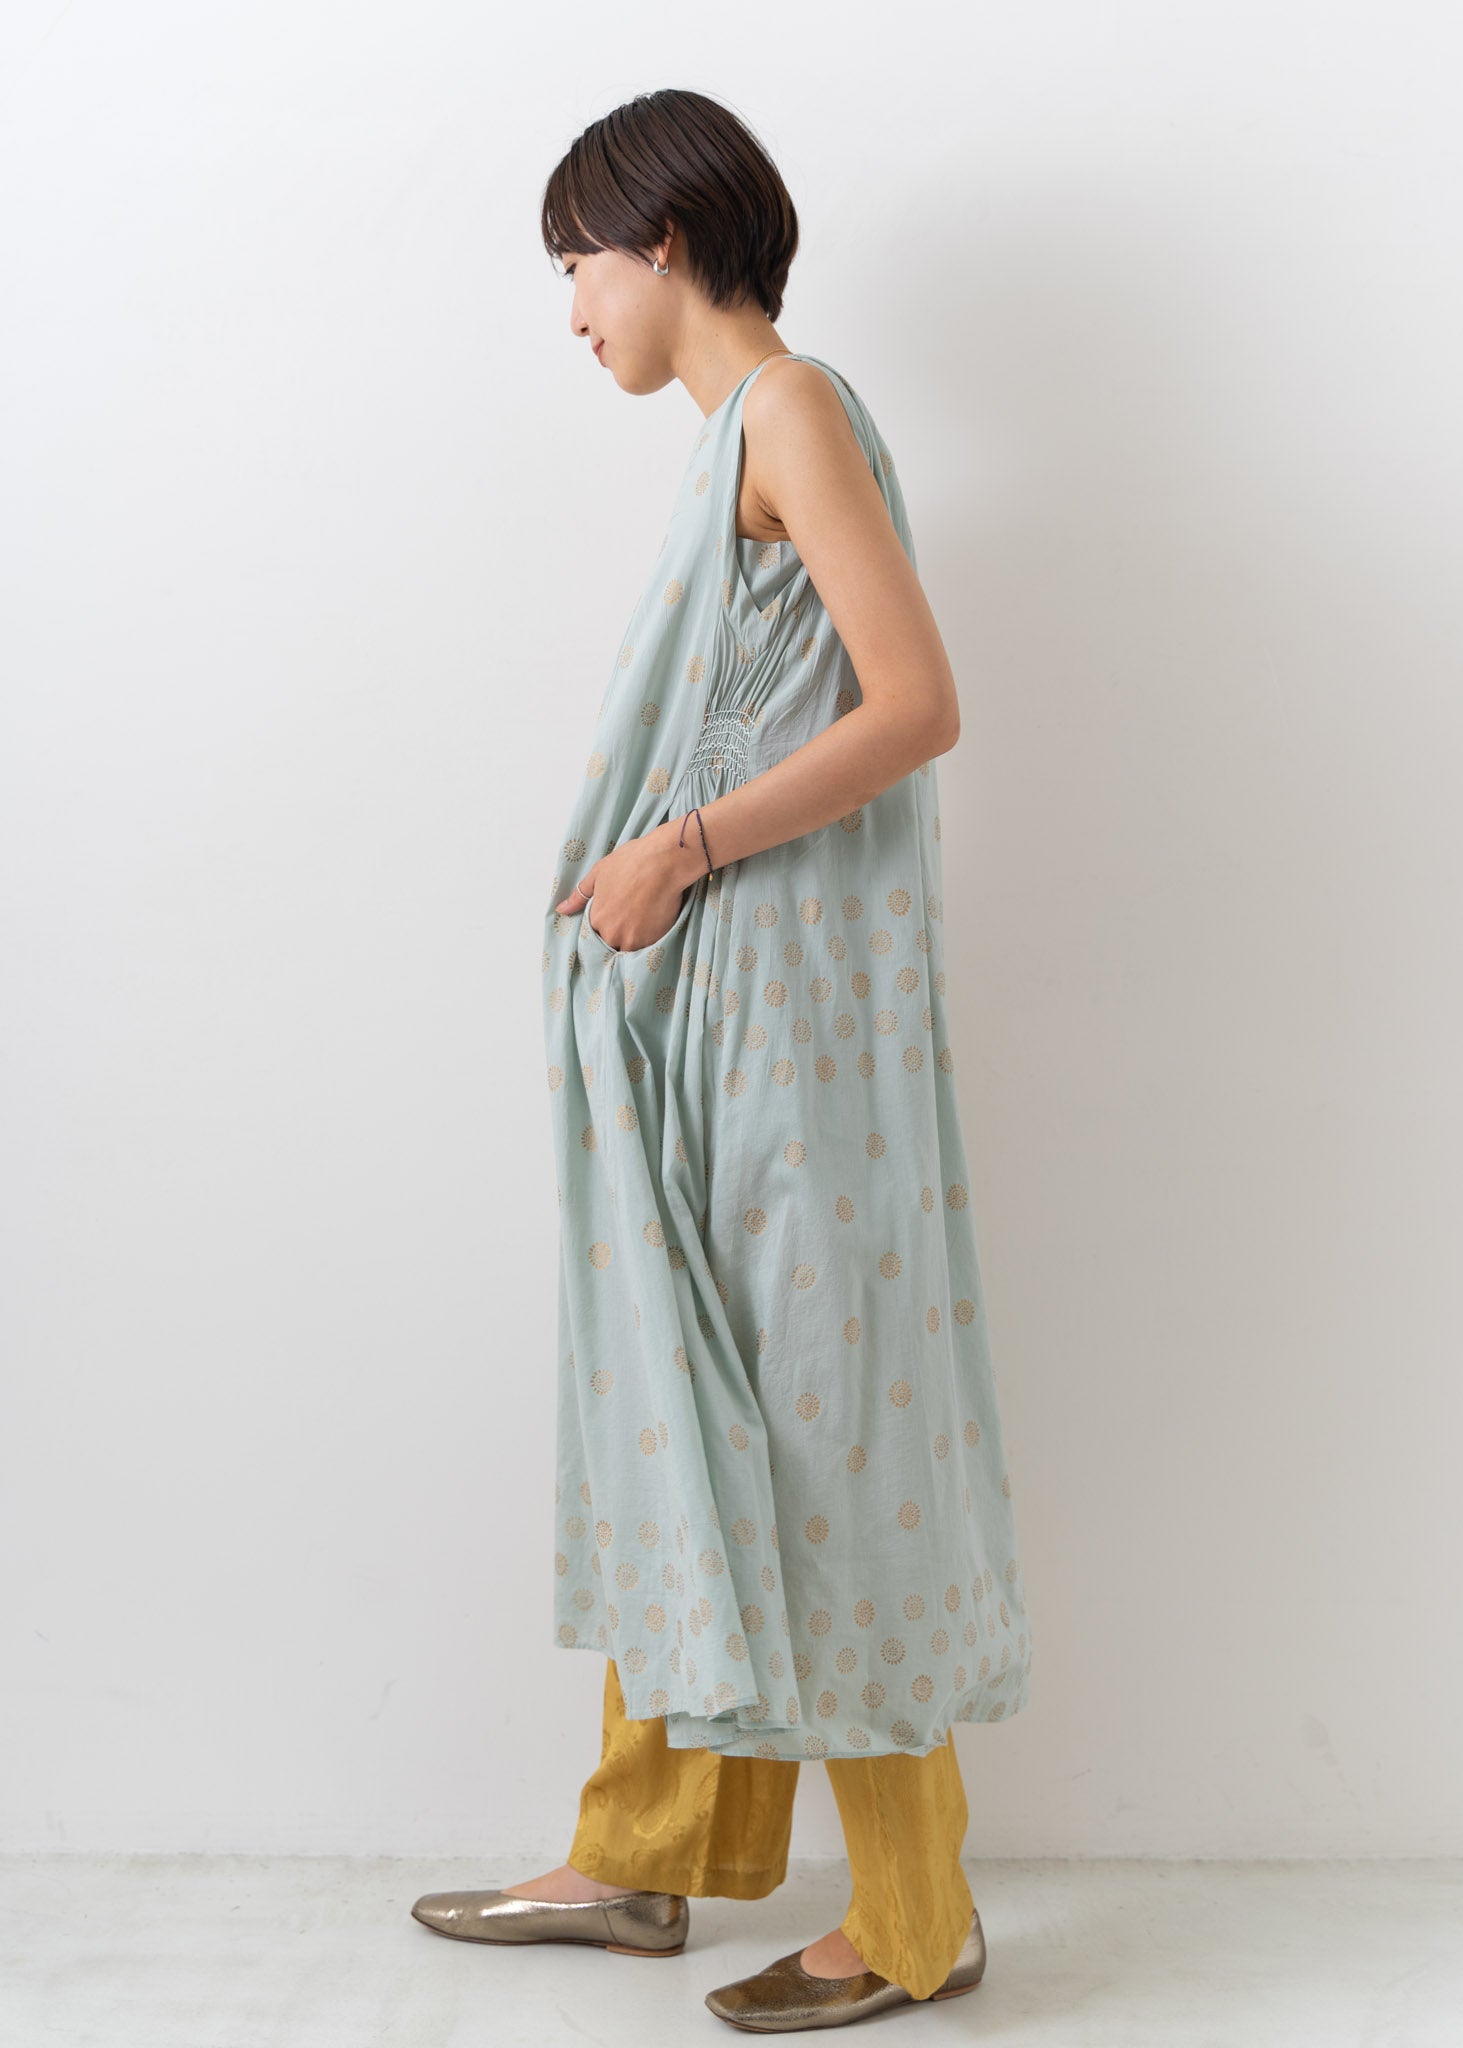 Cotton Silk Gold Print Sleeveless Dress